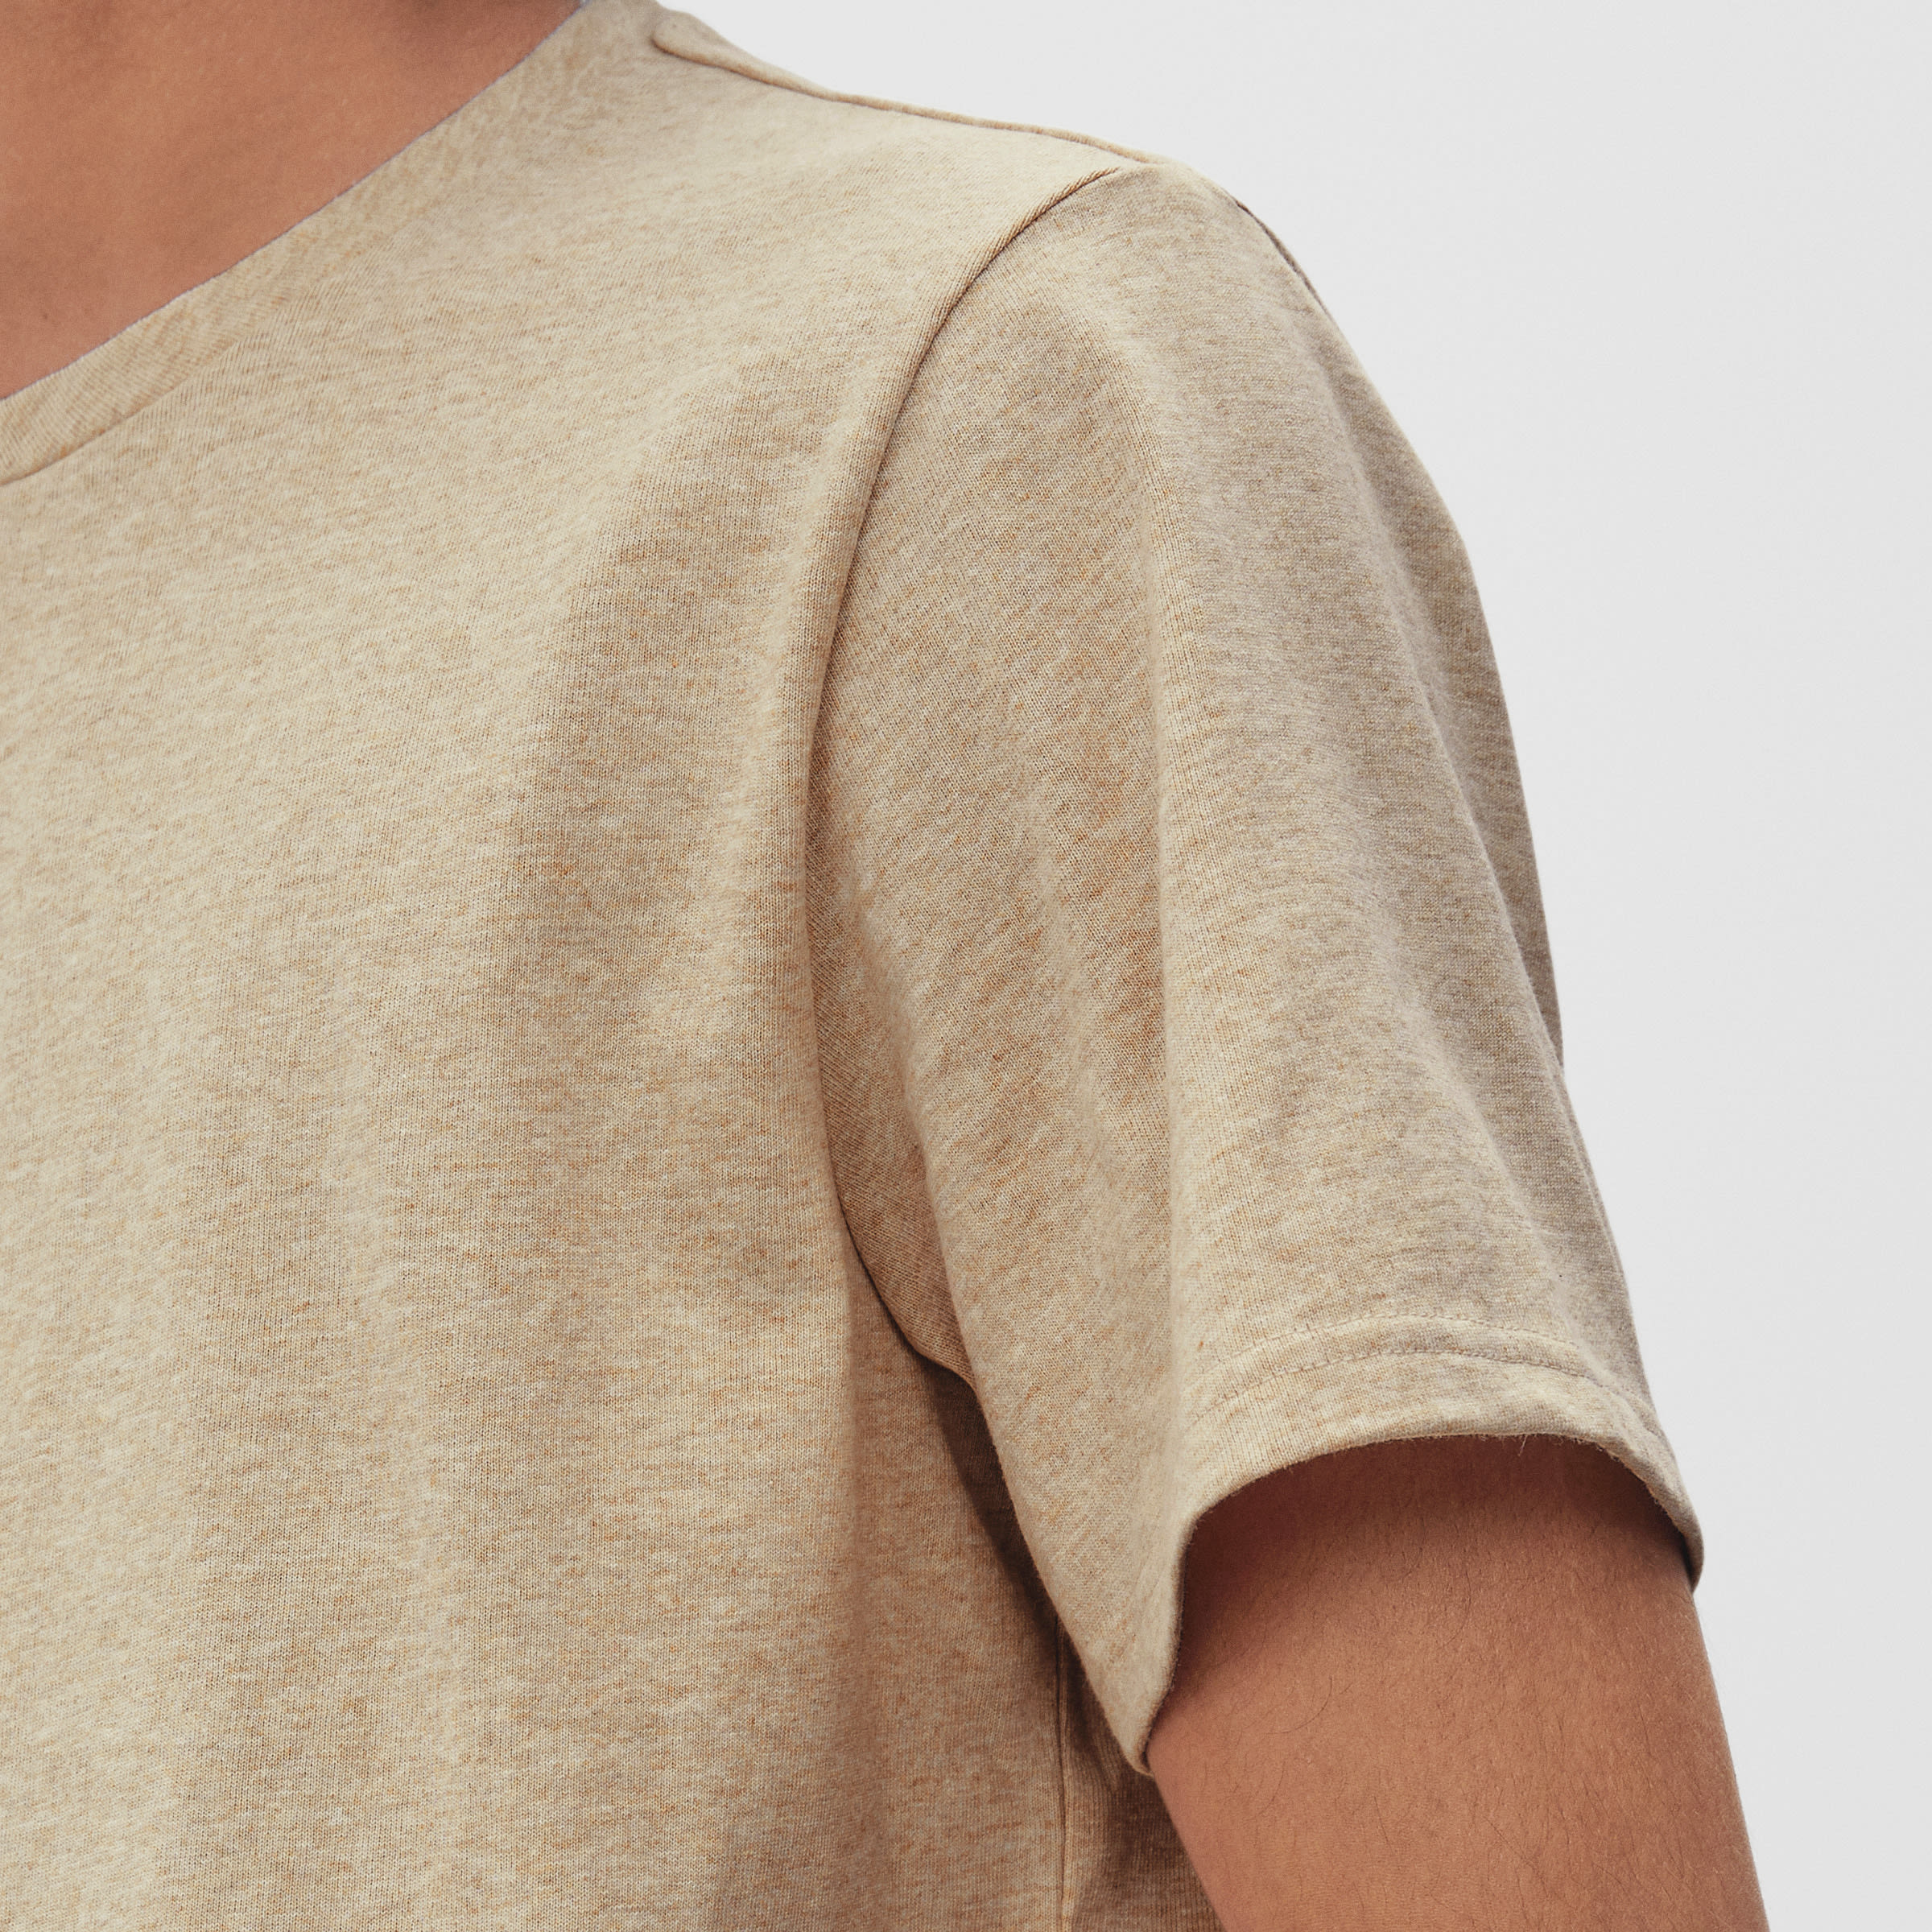 Men's Multipack T-Shirt Bundles – Everlane